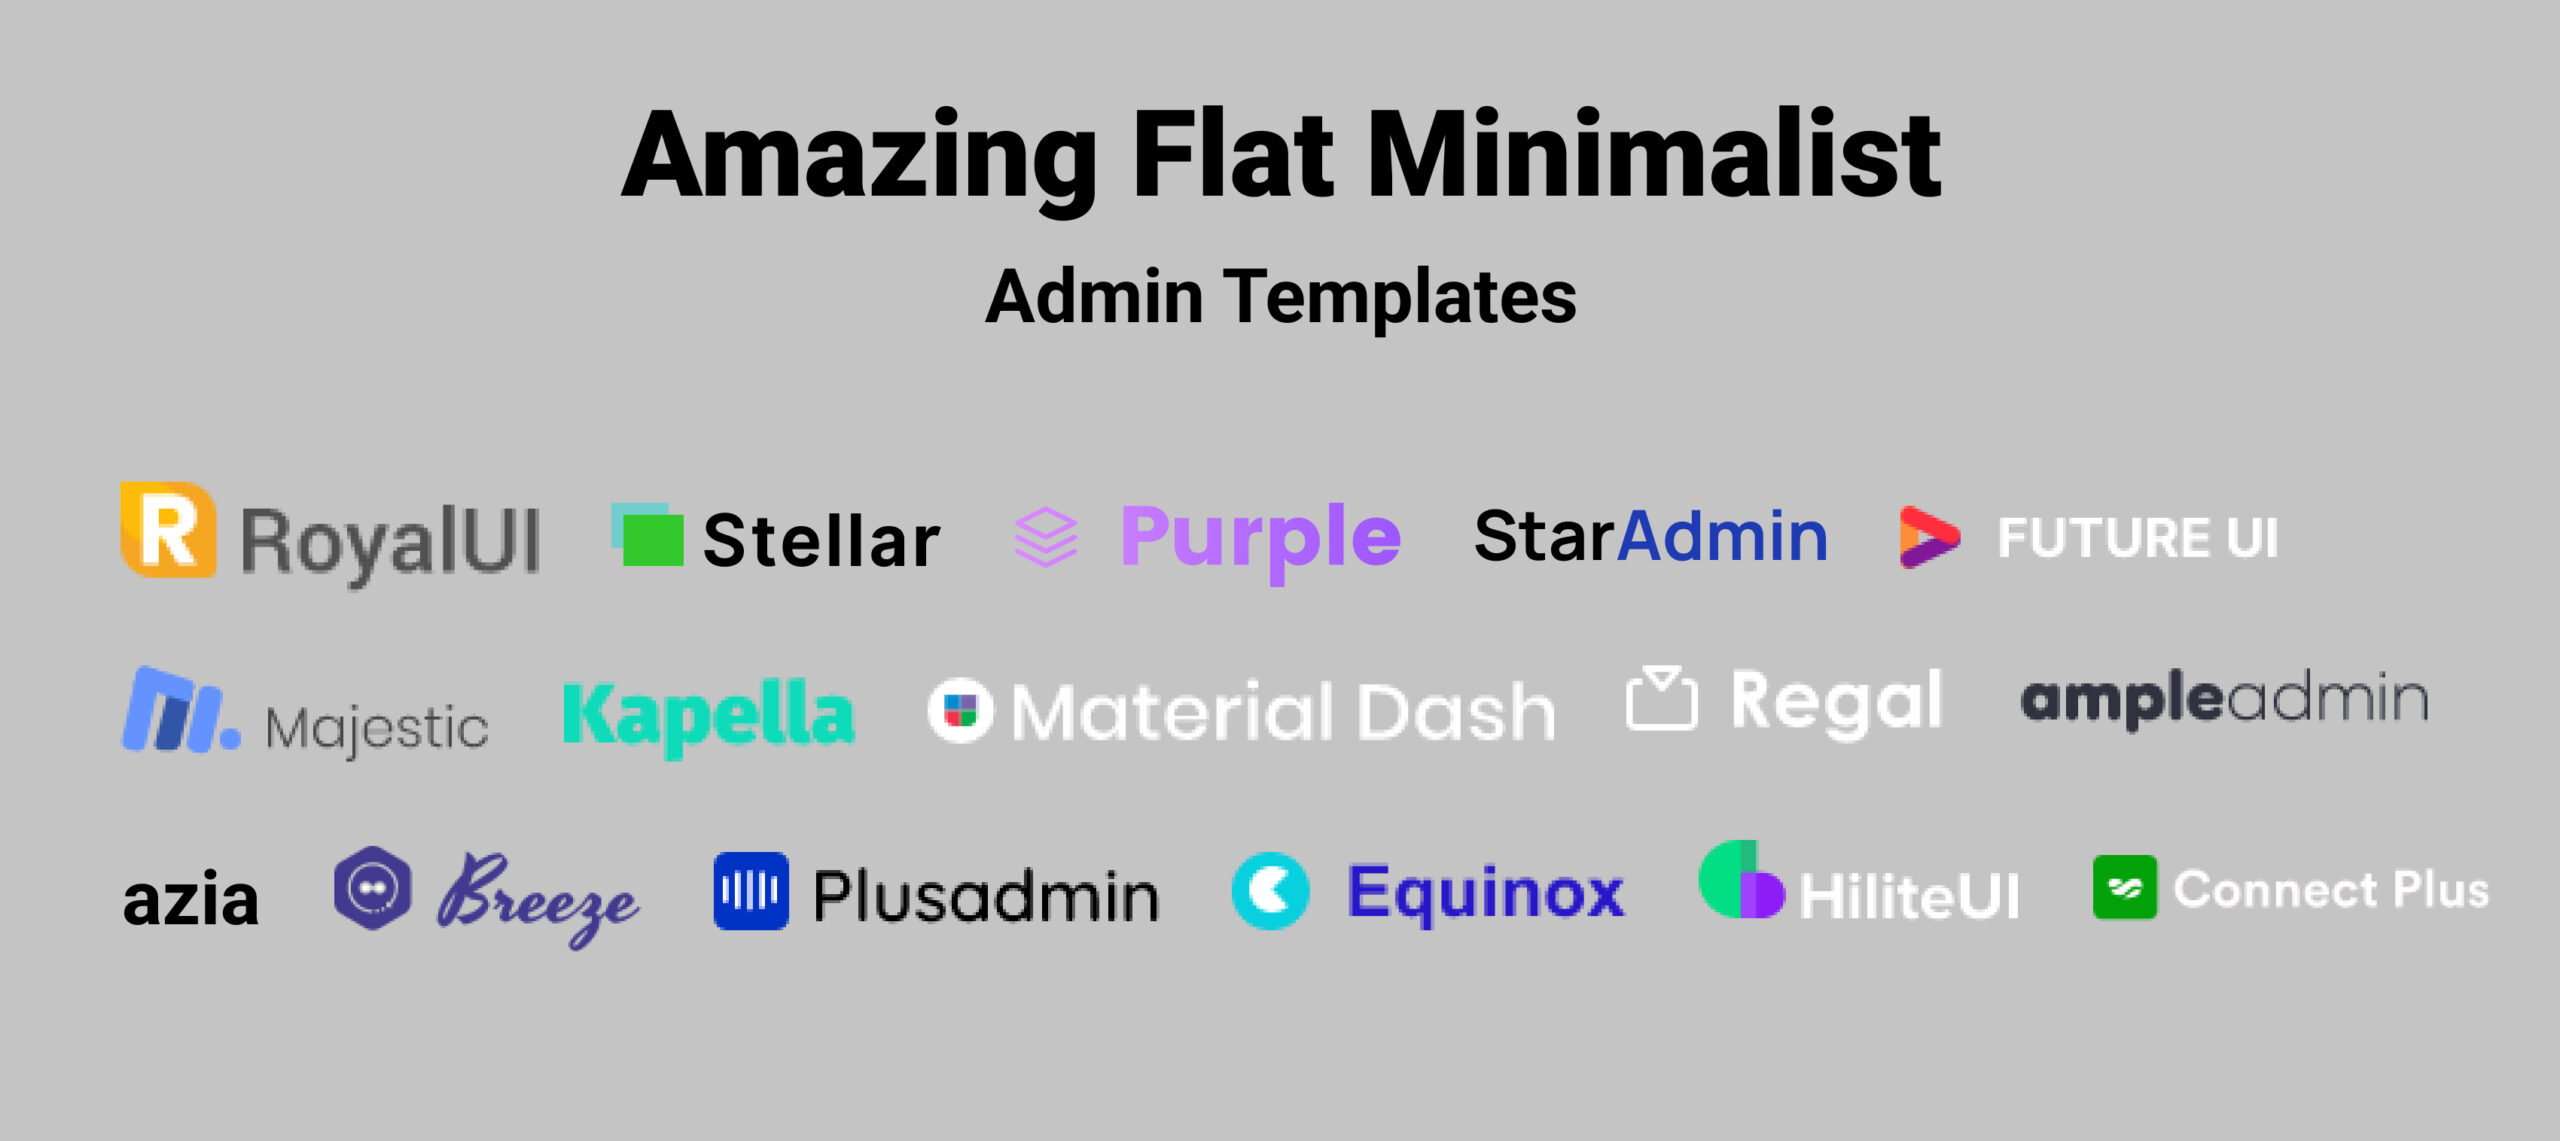  List of 20+ Amazing Free and Premium Flat Minimalist Admin Templates